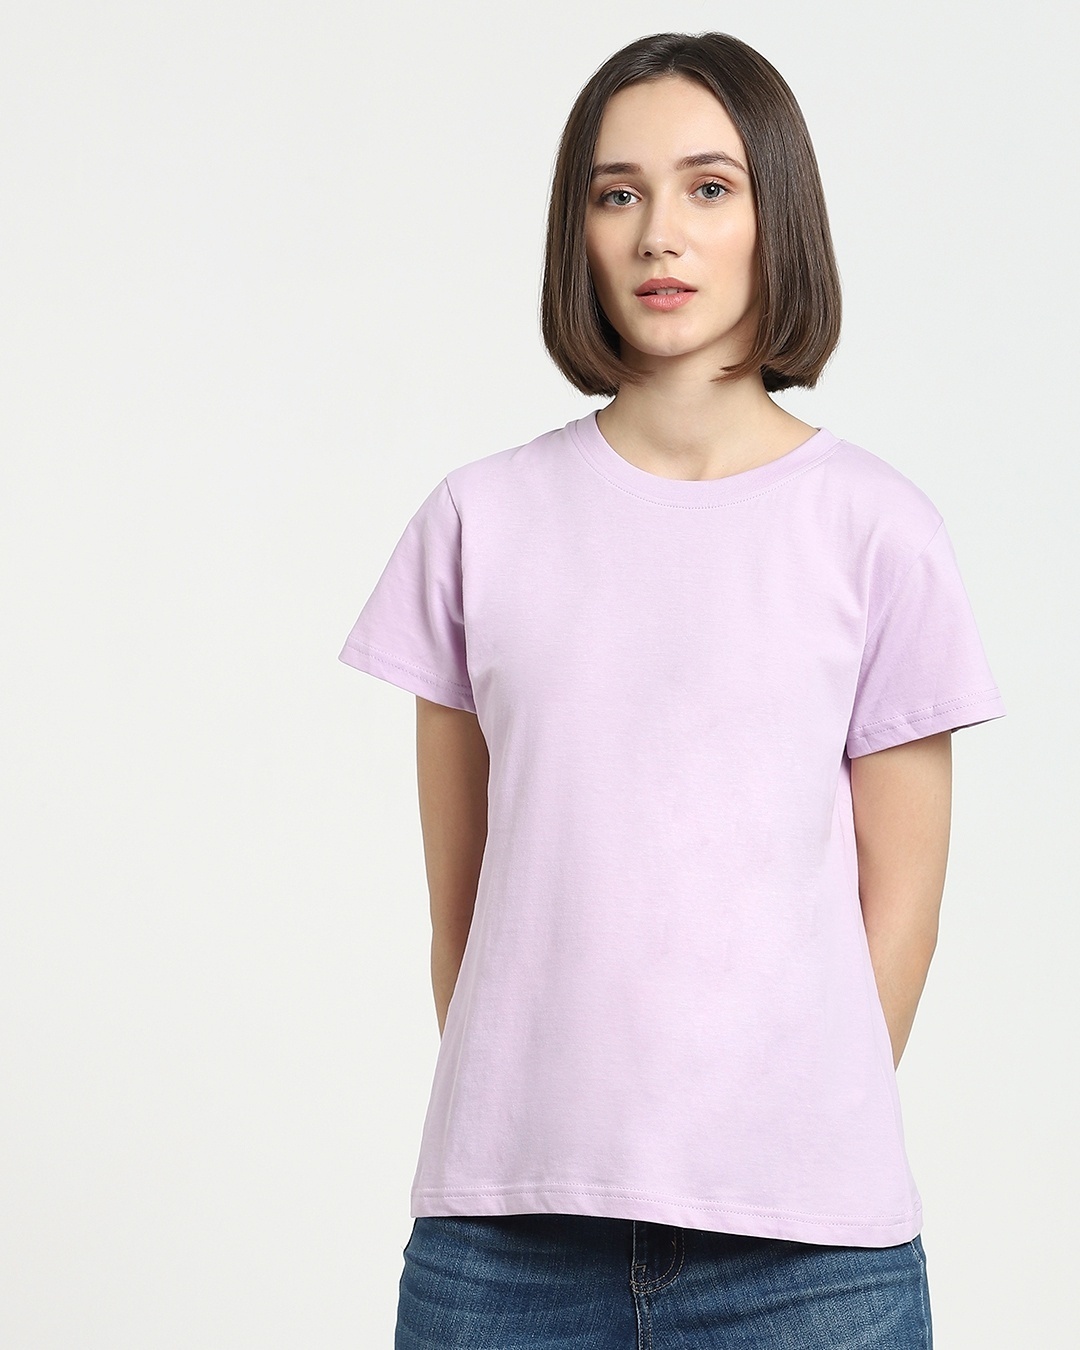 Shop Women's Whit & Purple Slim Fit T-shirt Pack of 2-Design